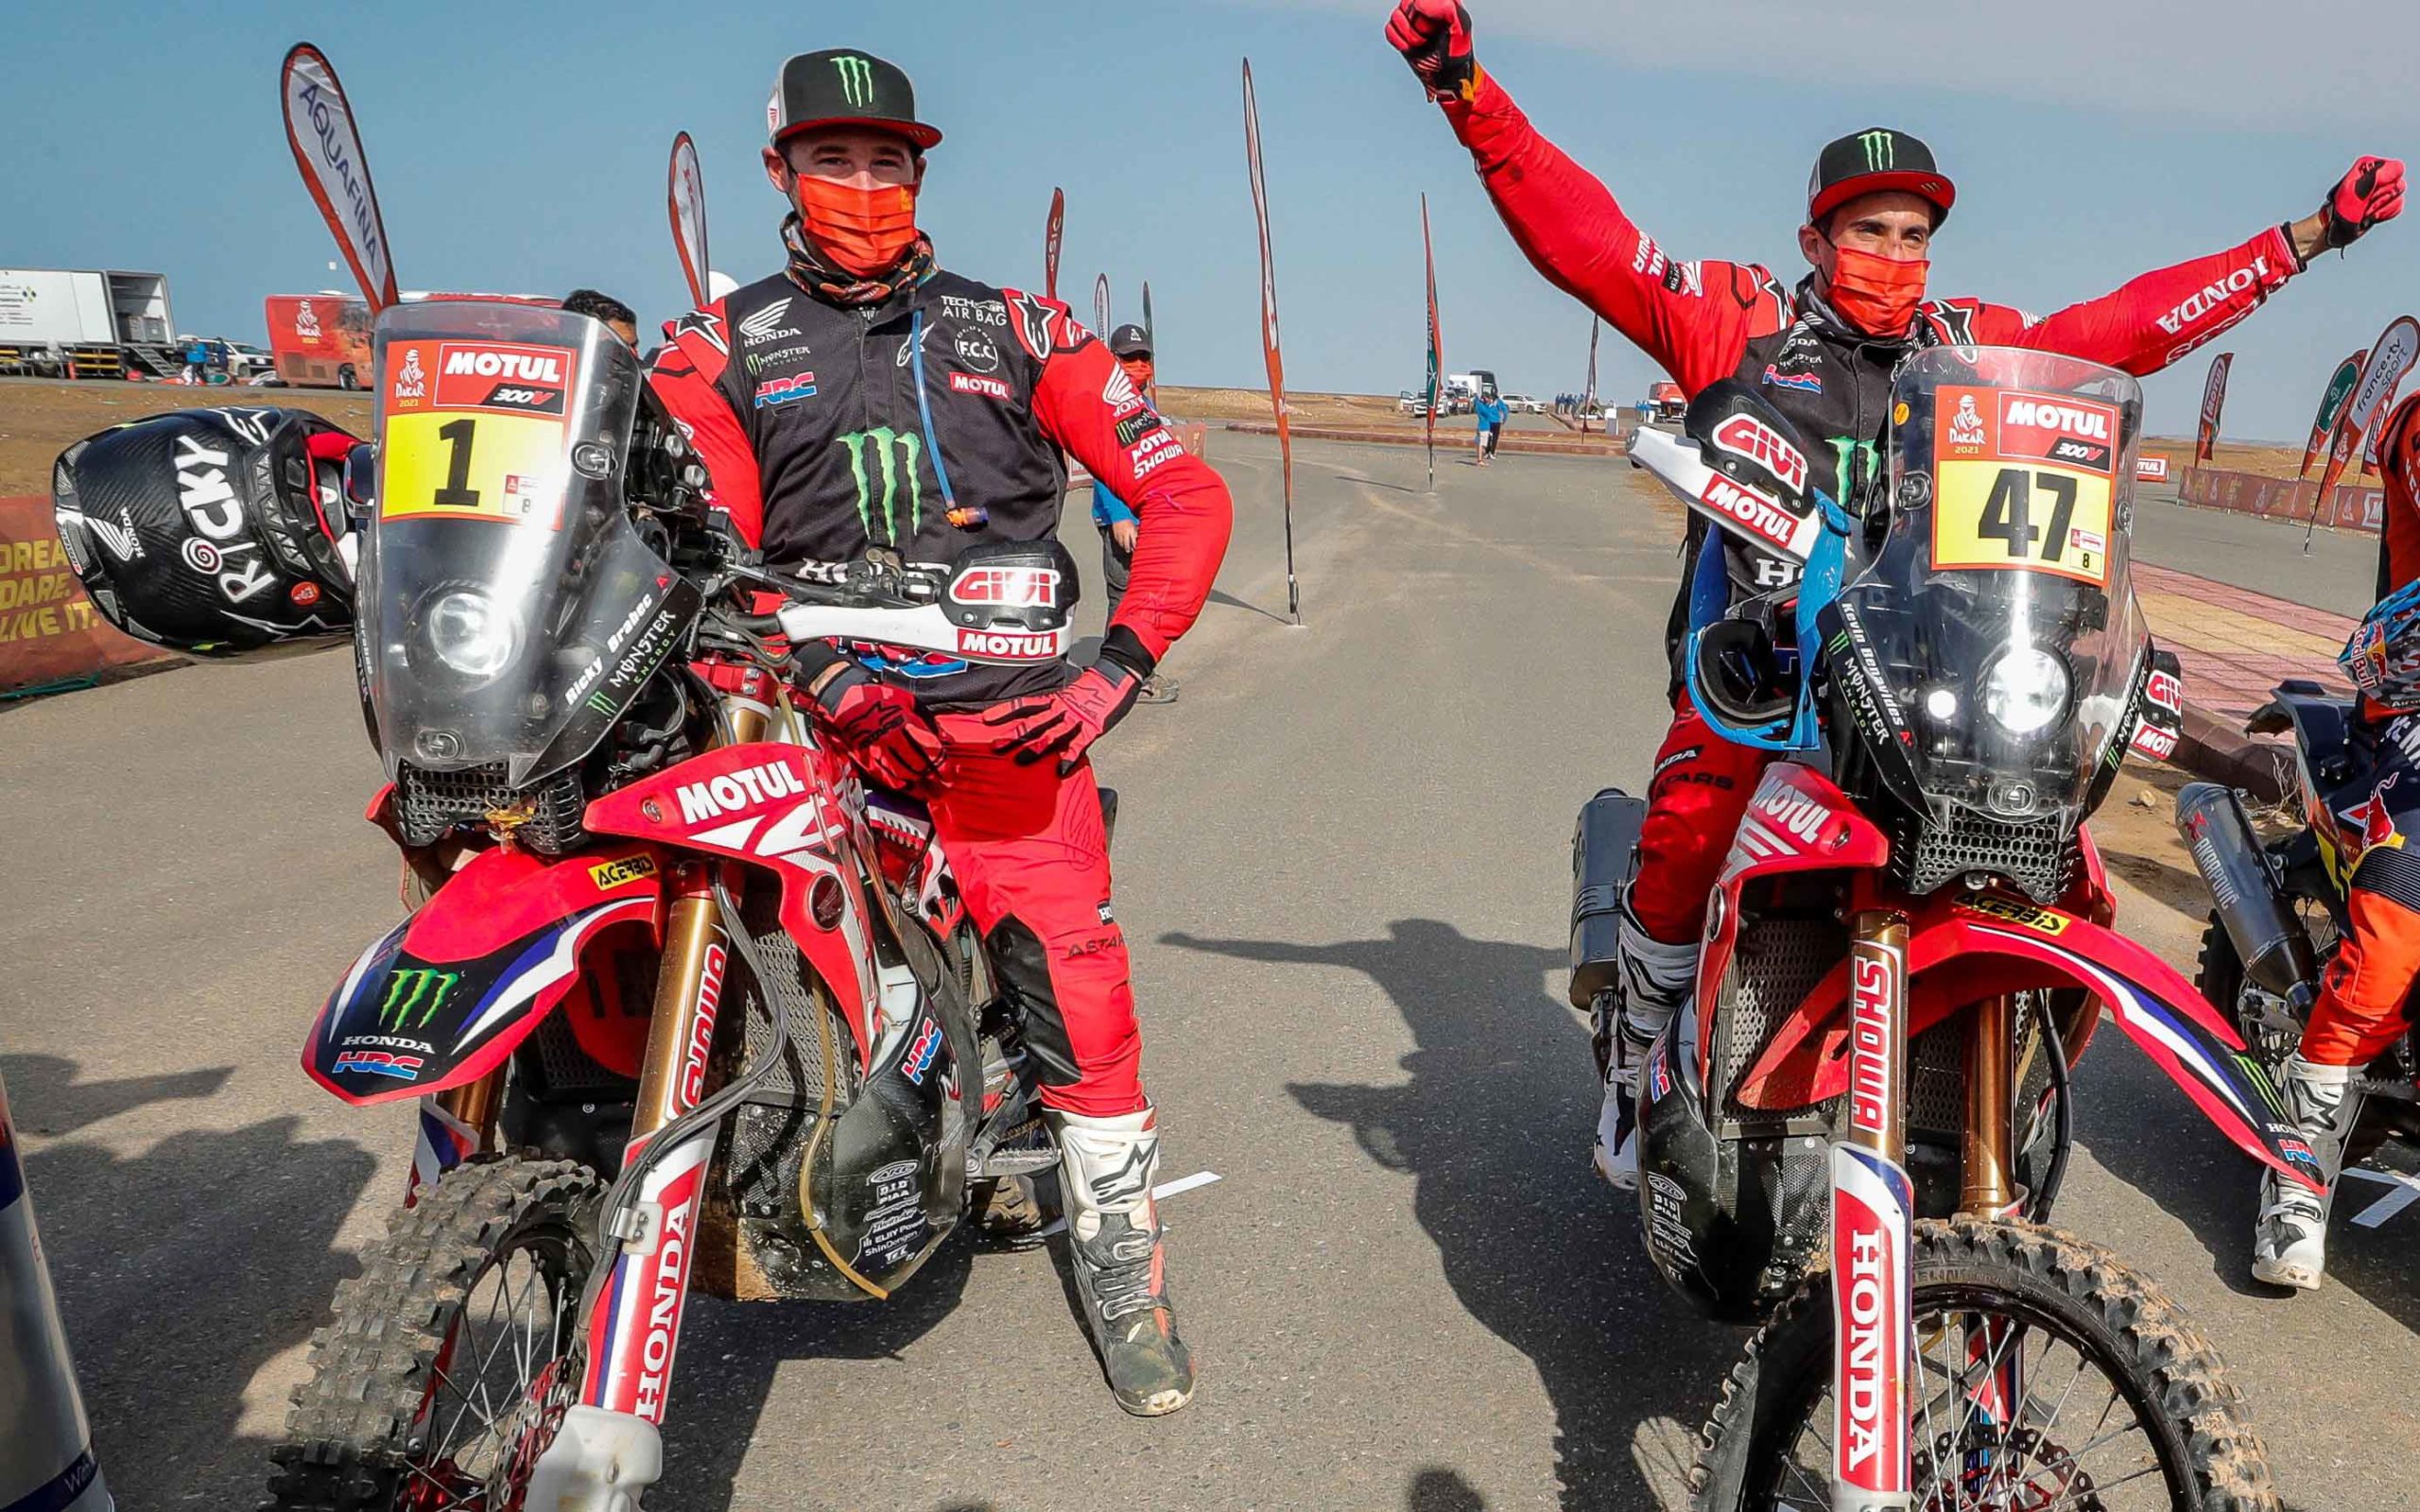 Kevin Benavides (rechts) gewinnt die Rallye Dakar 2021 vor Ricky Brabec